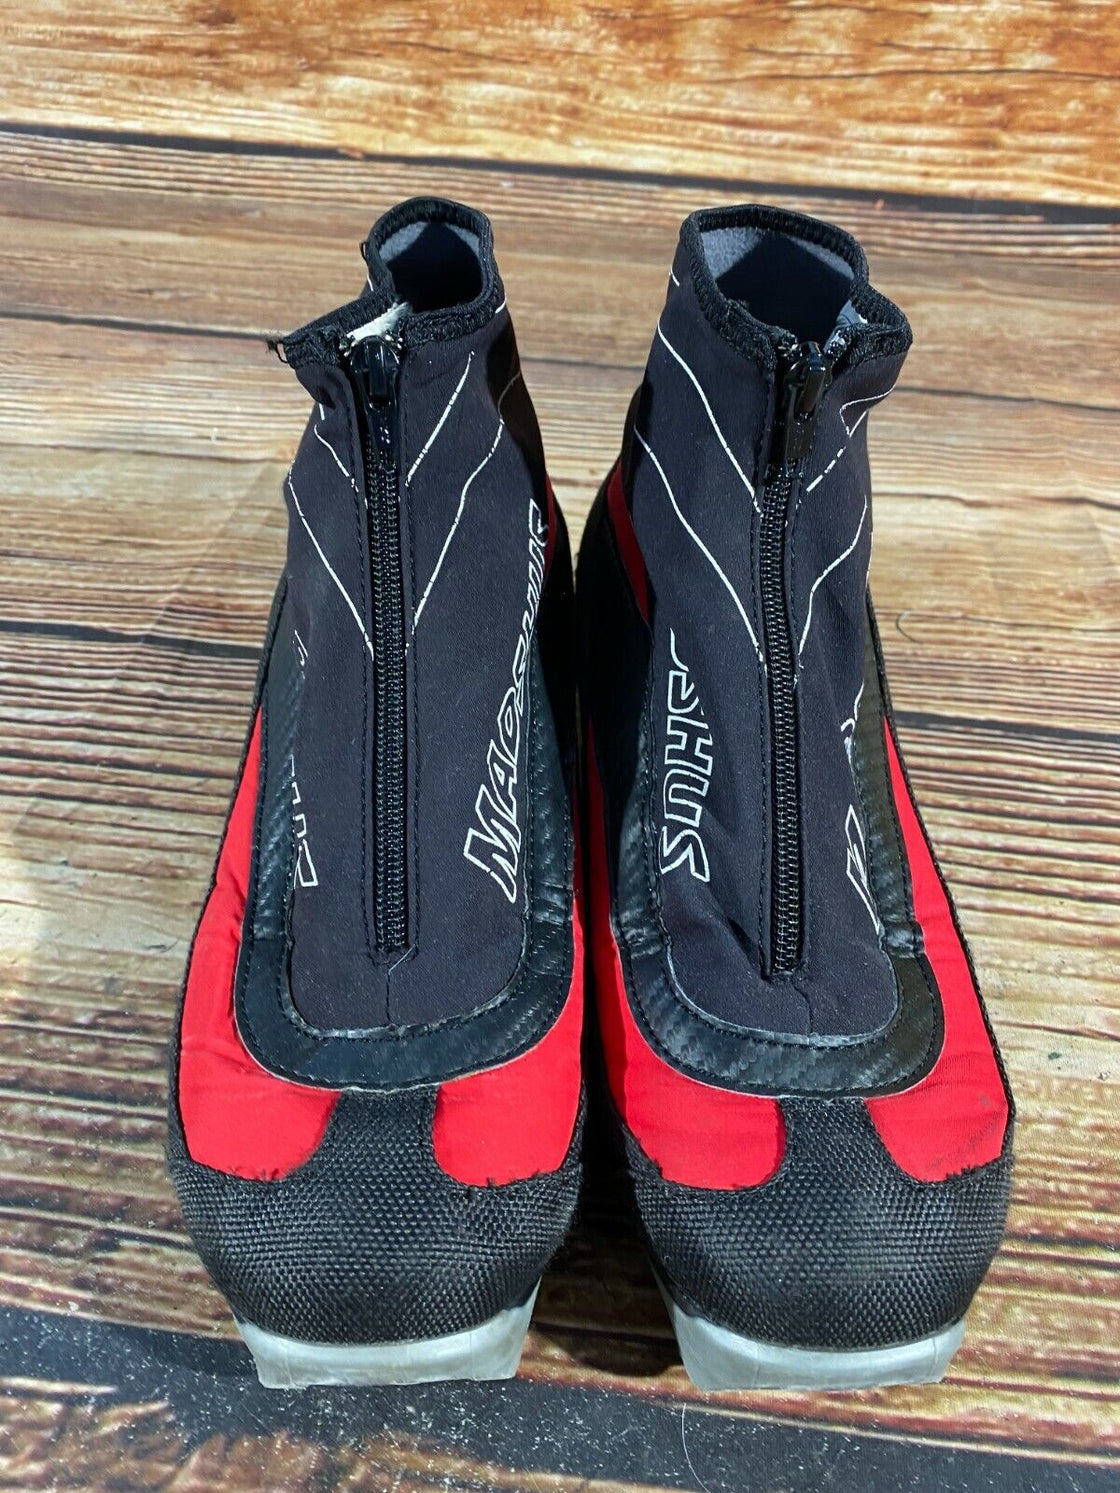 Madshus Hyper C Cross Country Ski Boots Size EU43 US9.5 for NNN